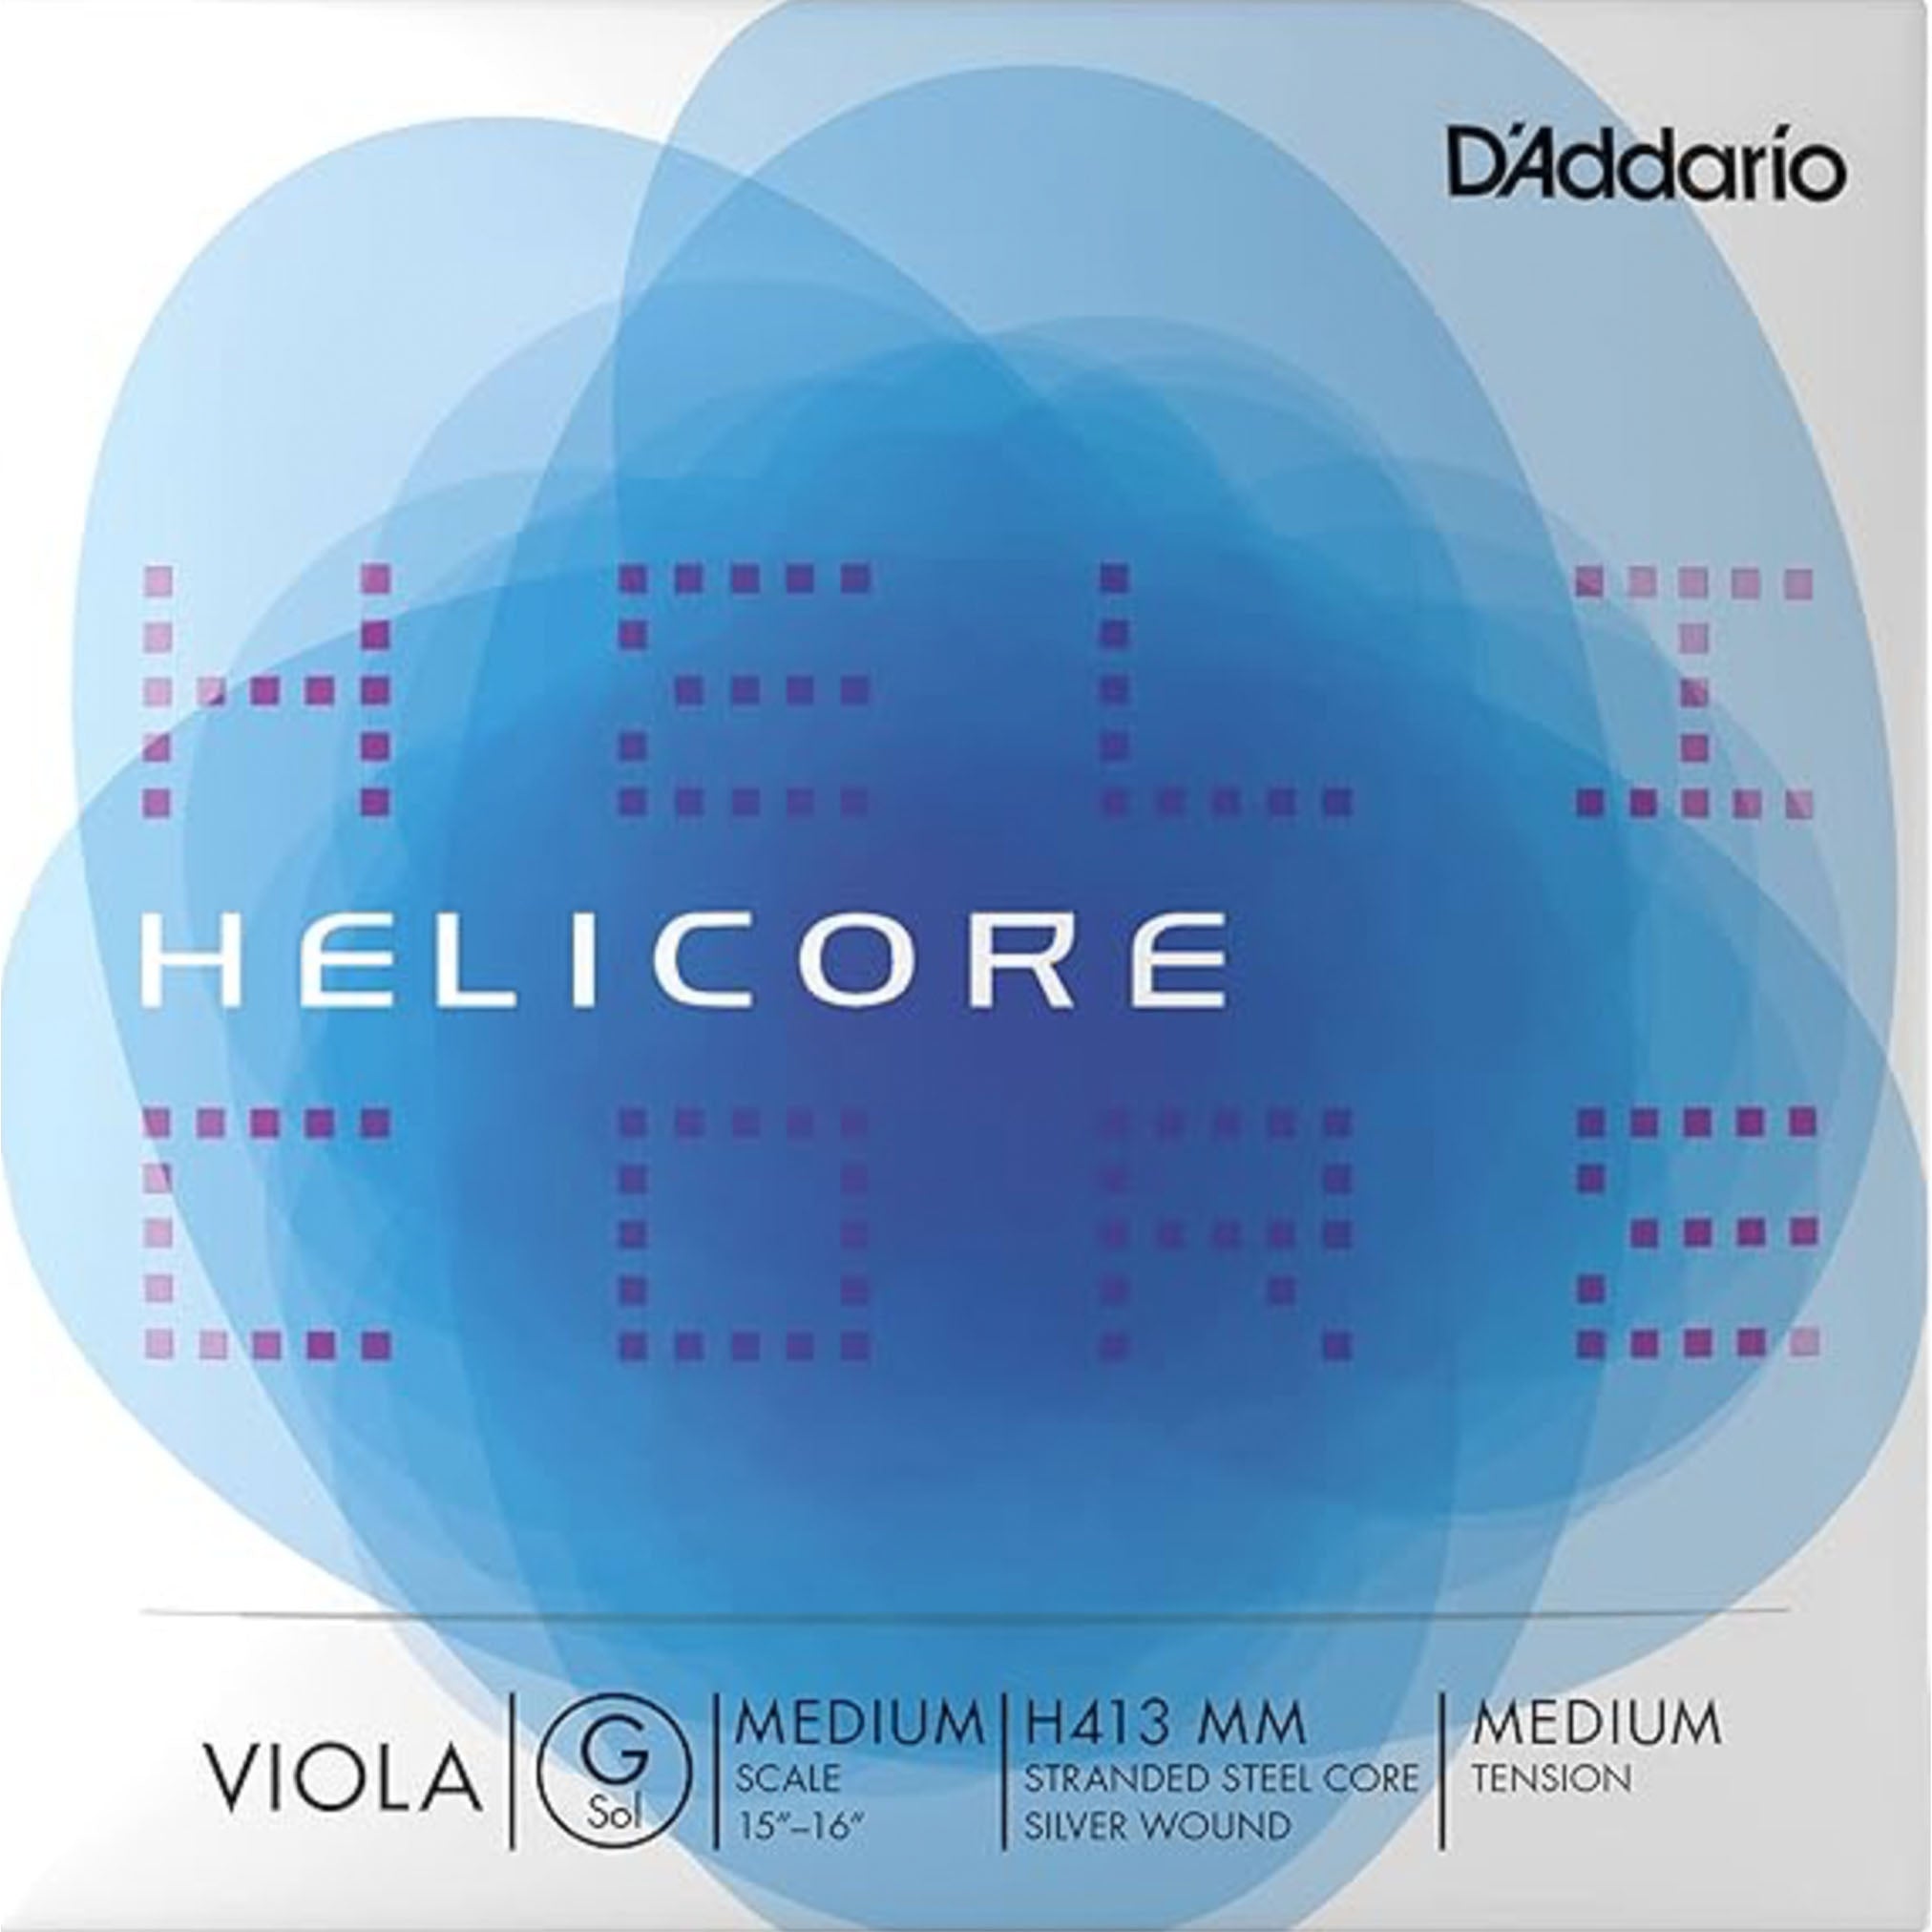 D'Addario Helicore Viola G String